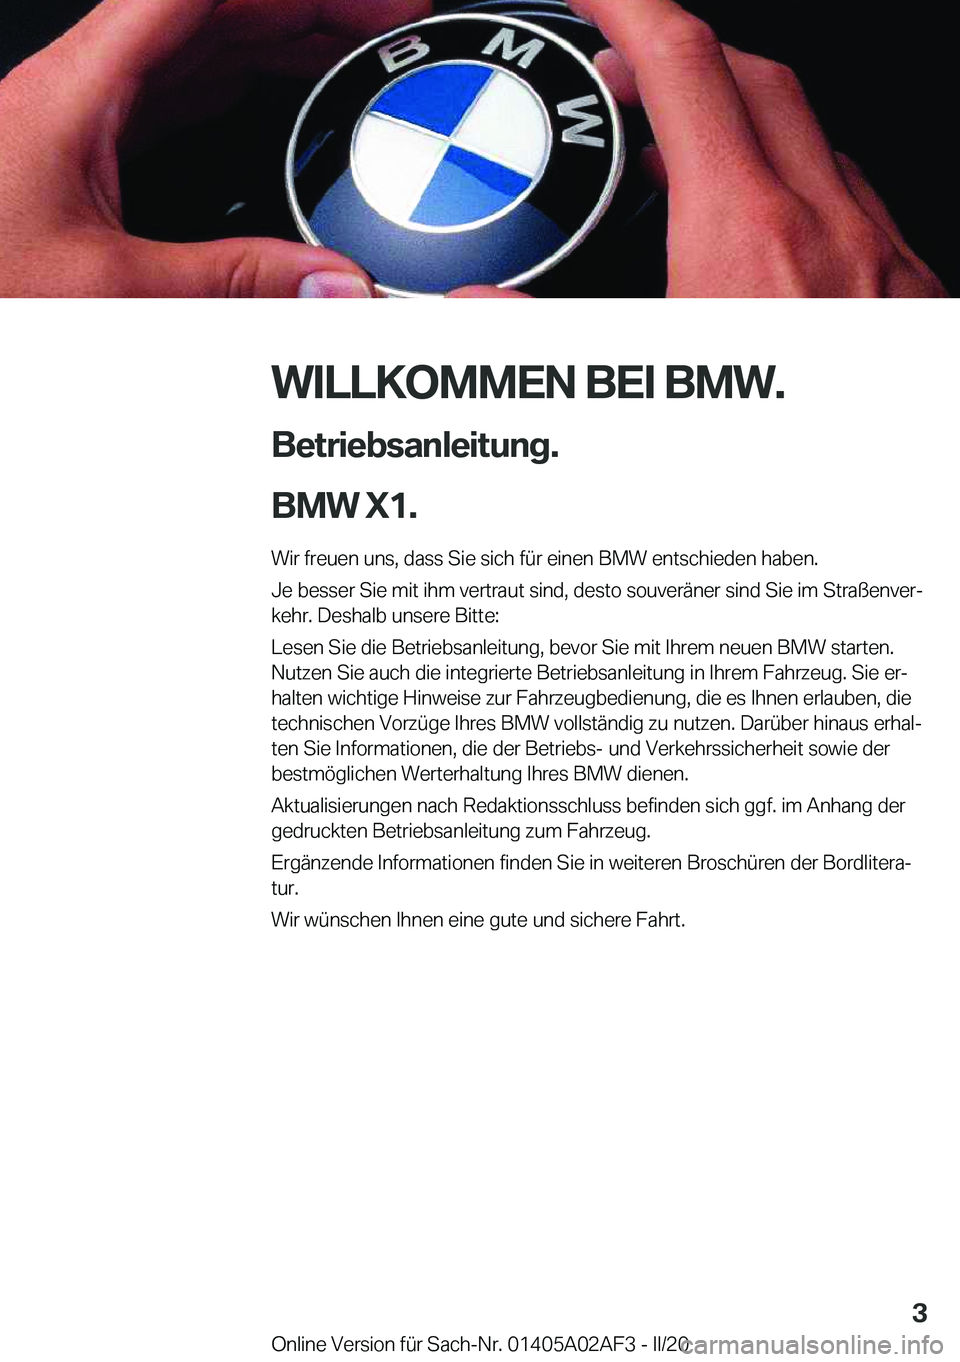 BMW X1 2020  Betriebsanleitungen (in German) �W�I�L�L�K�O�M�M�E�N��B�E�I��B�M�W�.�B�e�t�r�i�e�b�s�a�n�l�e�i�t�u�n�g�.
�B�M�W��X�1�. �W�i�r��f�r�e�u�e�n��u�n�s�,��d�a�s�s��S�i�e��s�i�c�h��f�